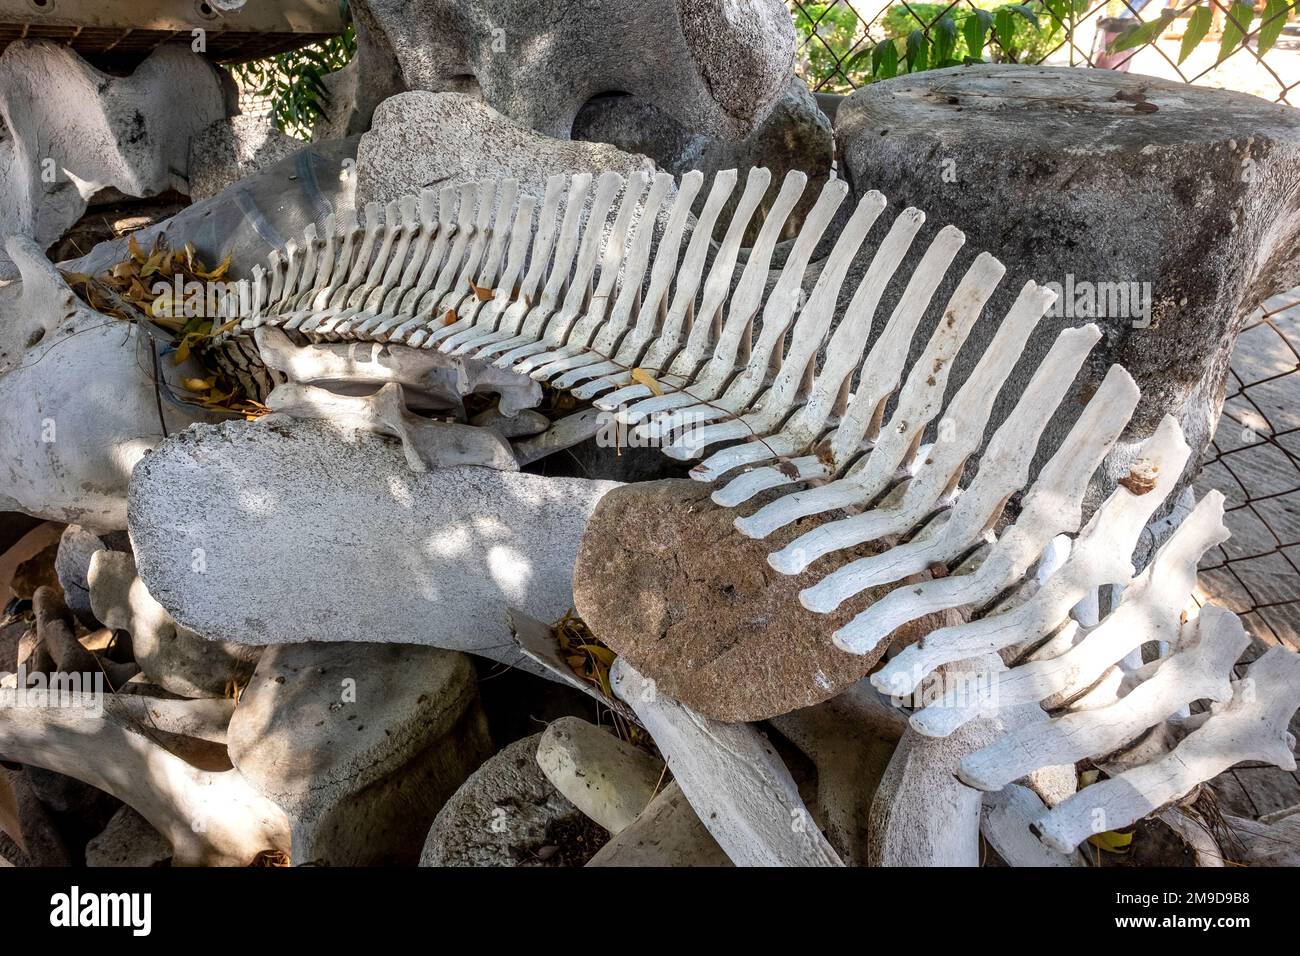 Whale bones on display at the Museo de la Ballena, La Paz, Baja California, Mexico Stock Photo